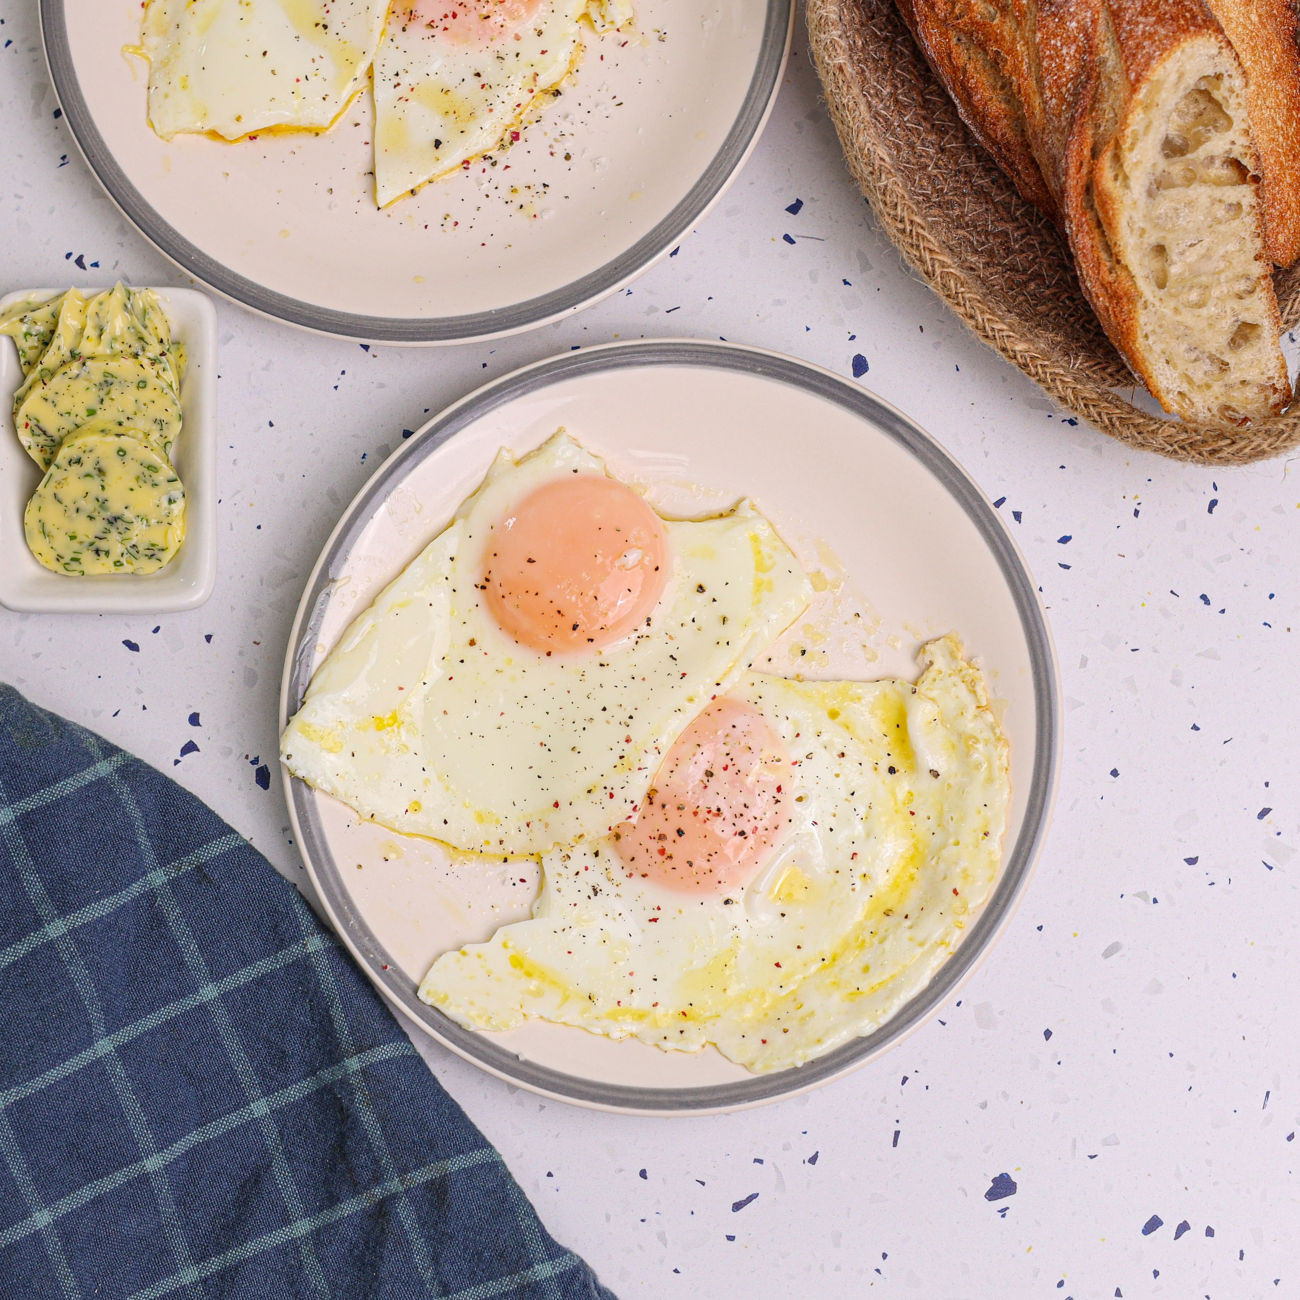 Fried Eggs Recipe: How to Make Fried Eggs - Australian Eggs